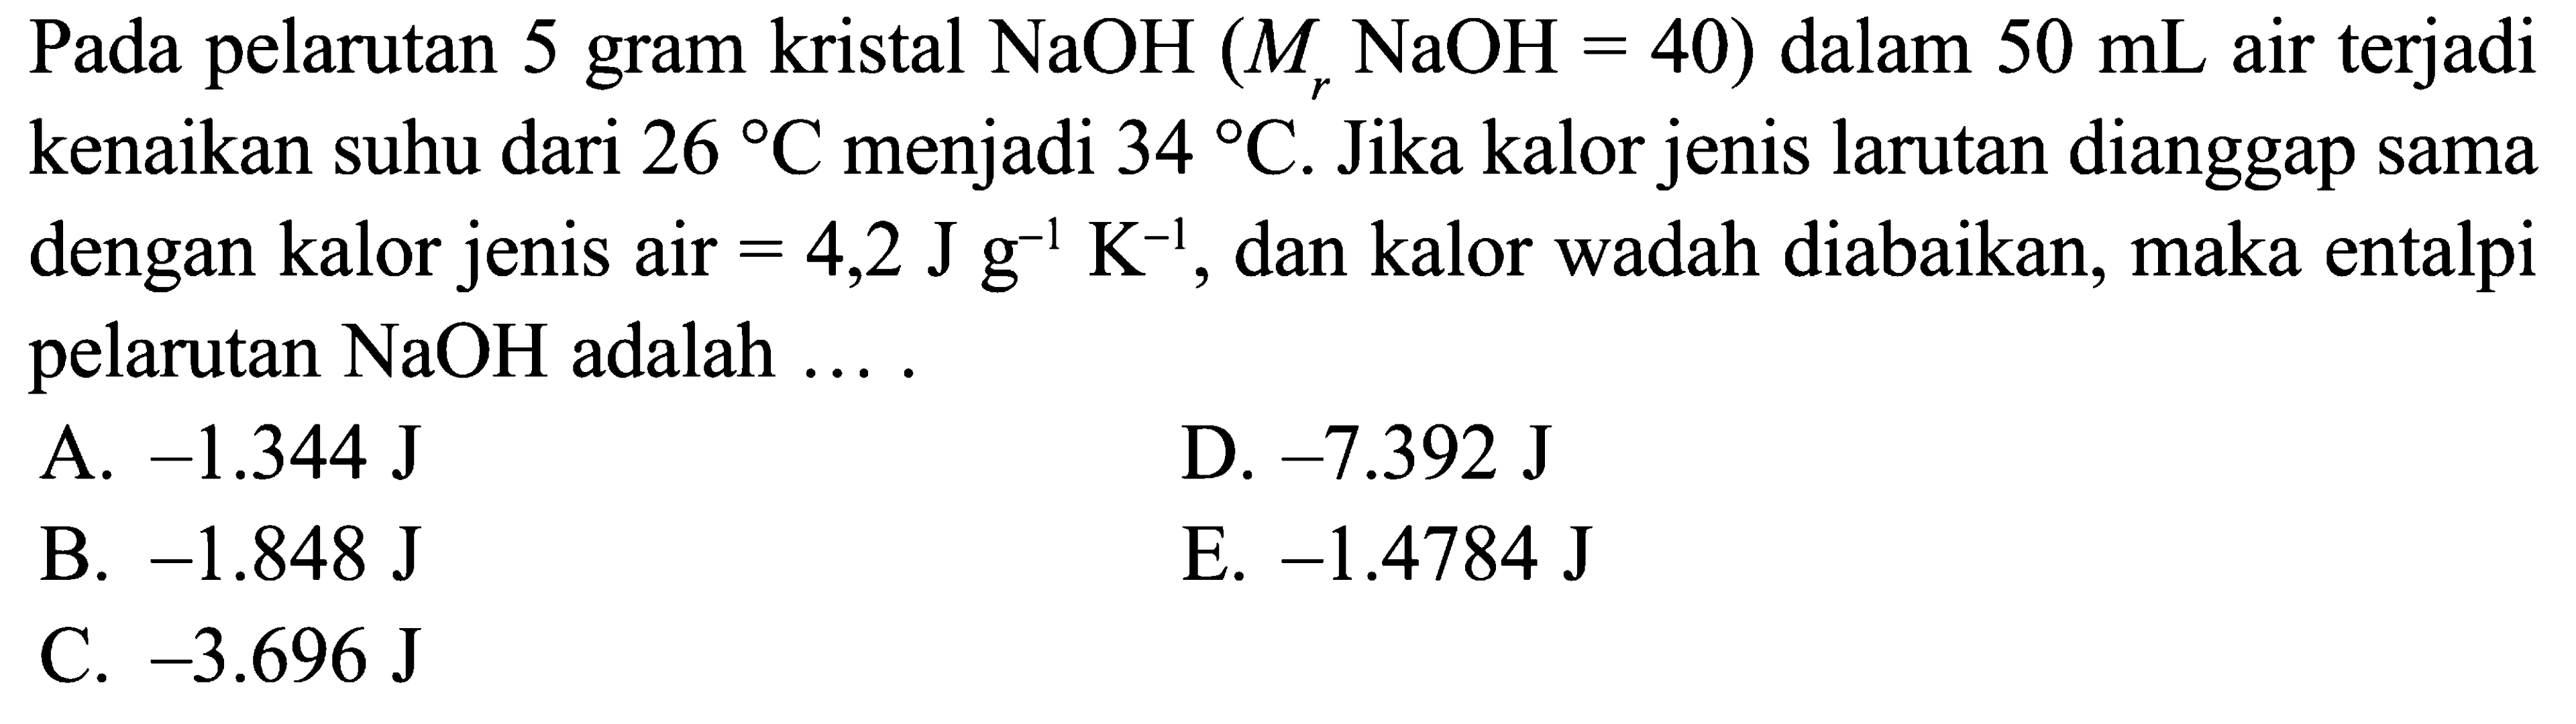 Pada pelarutan 5 gram kristal NaOH (Mr NaOH = 40) dalam 50 mL air terjadi kenaikan suhu dari 26 C menjadi 34 C. Jika kalor jenis larutan dianggap sama dengan kalor jenis air 4,2 J g^(-1) K^(-1), dan kalor wadah diabaikan, maka entalpi pelarutan NaOH adalah ....